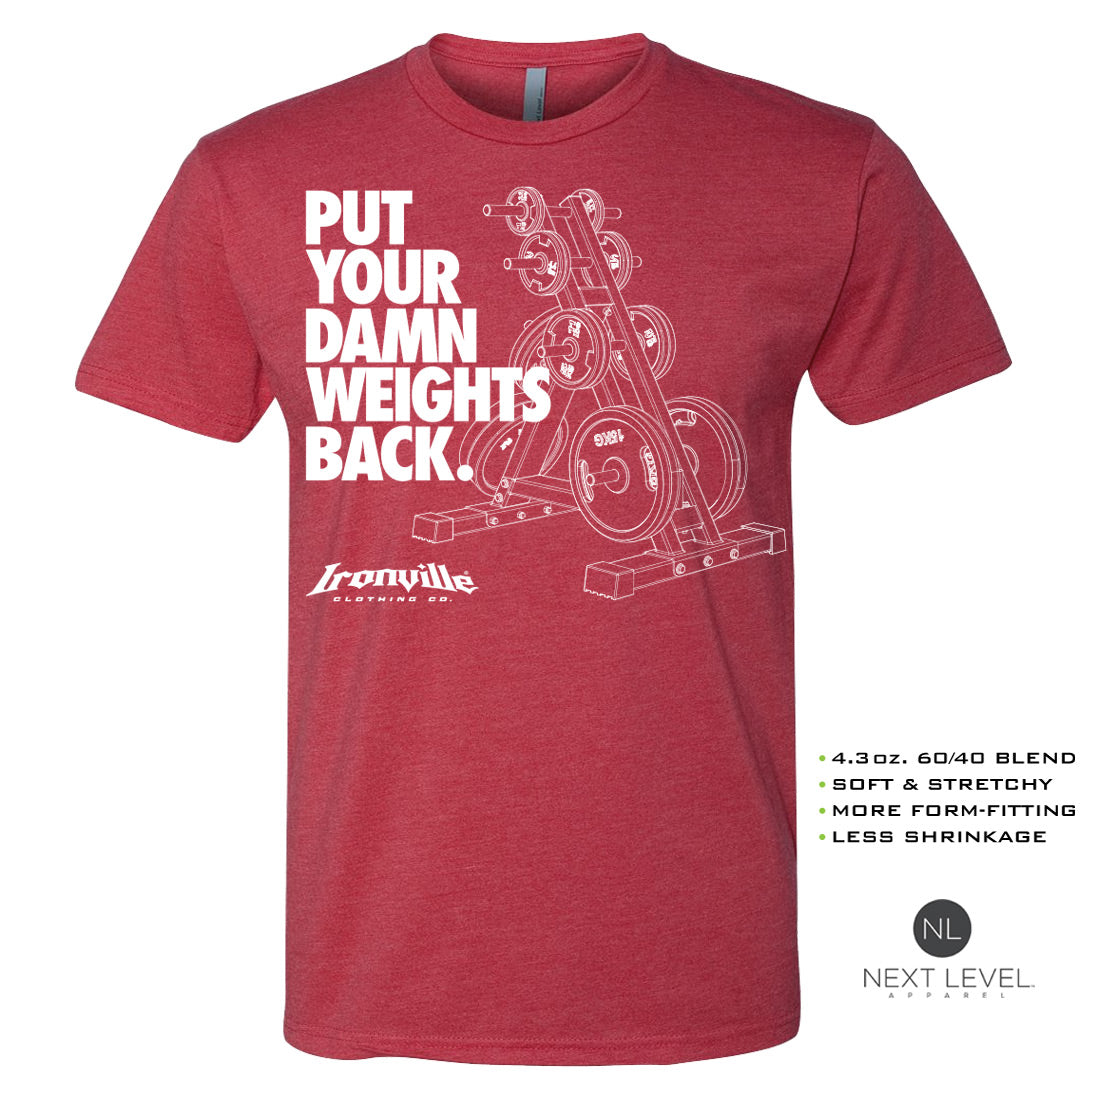 Ironville DAMN WEIGHTS Soft-Blend Fitted Gym T-Shirt